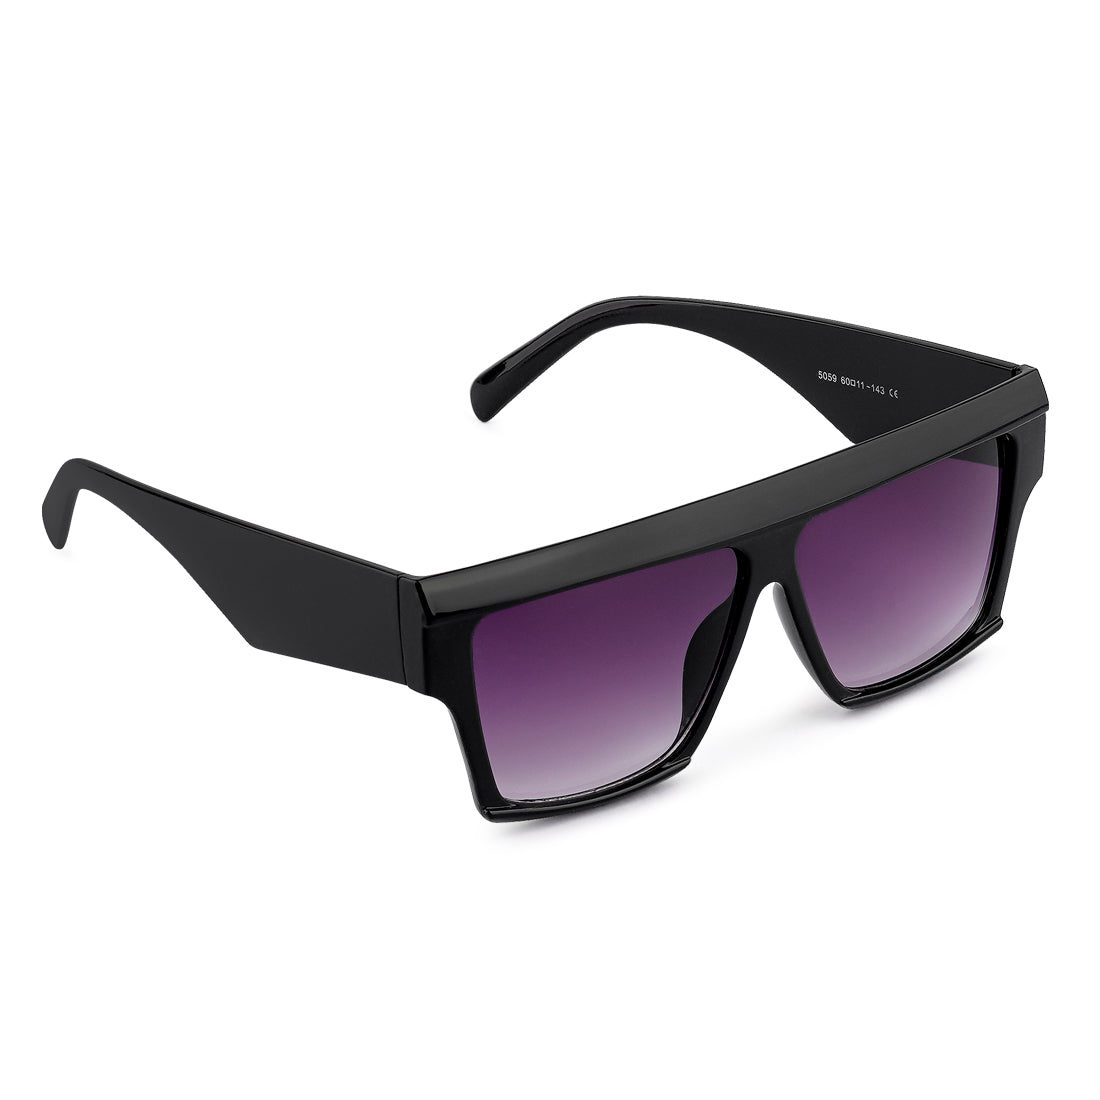 Broad Temple Wayfarer Sunglasses In Purple